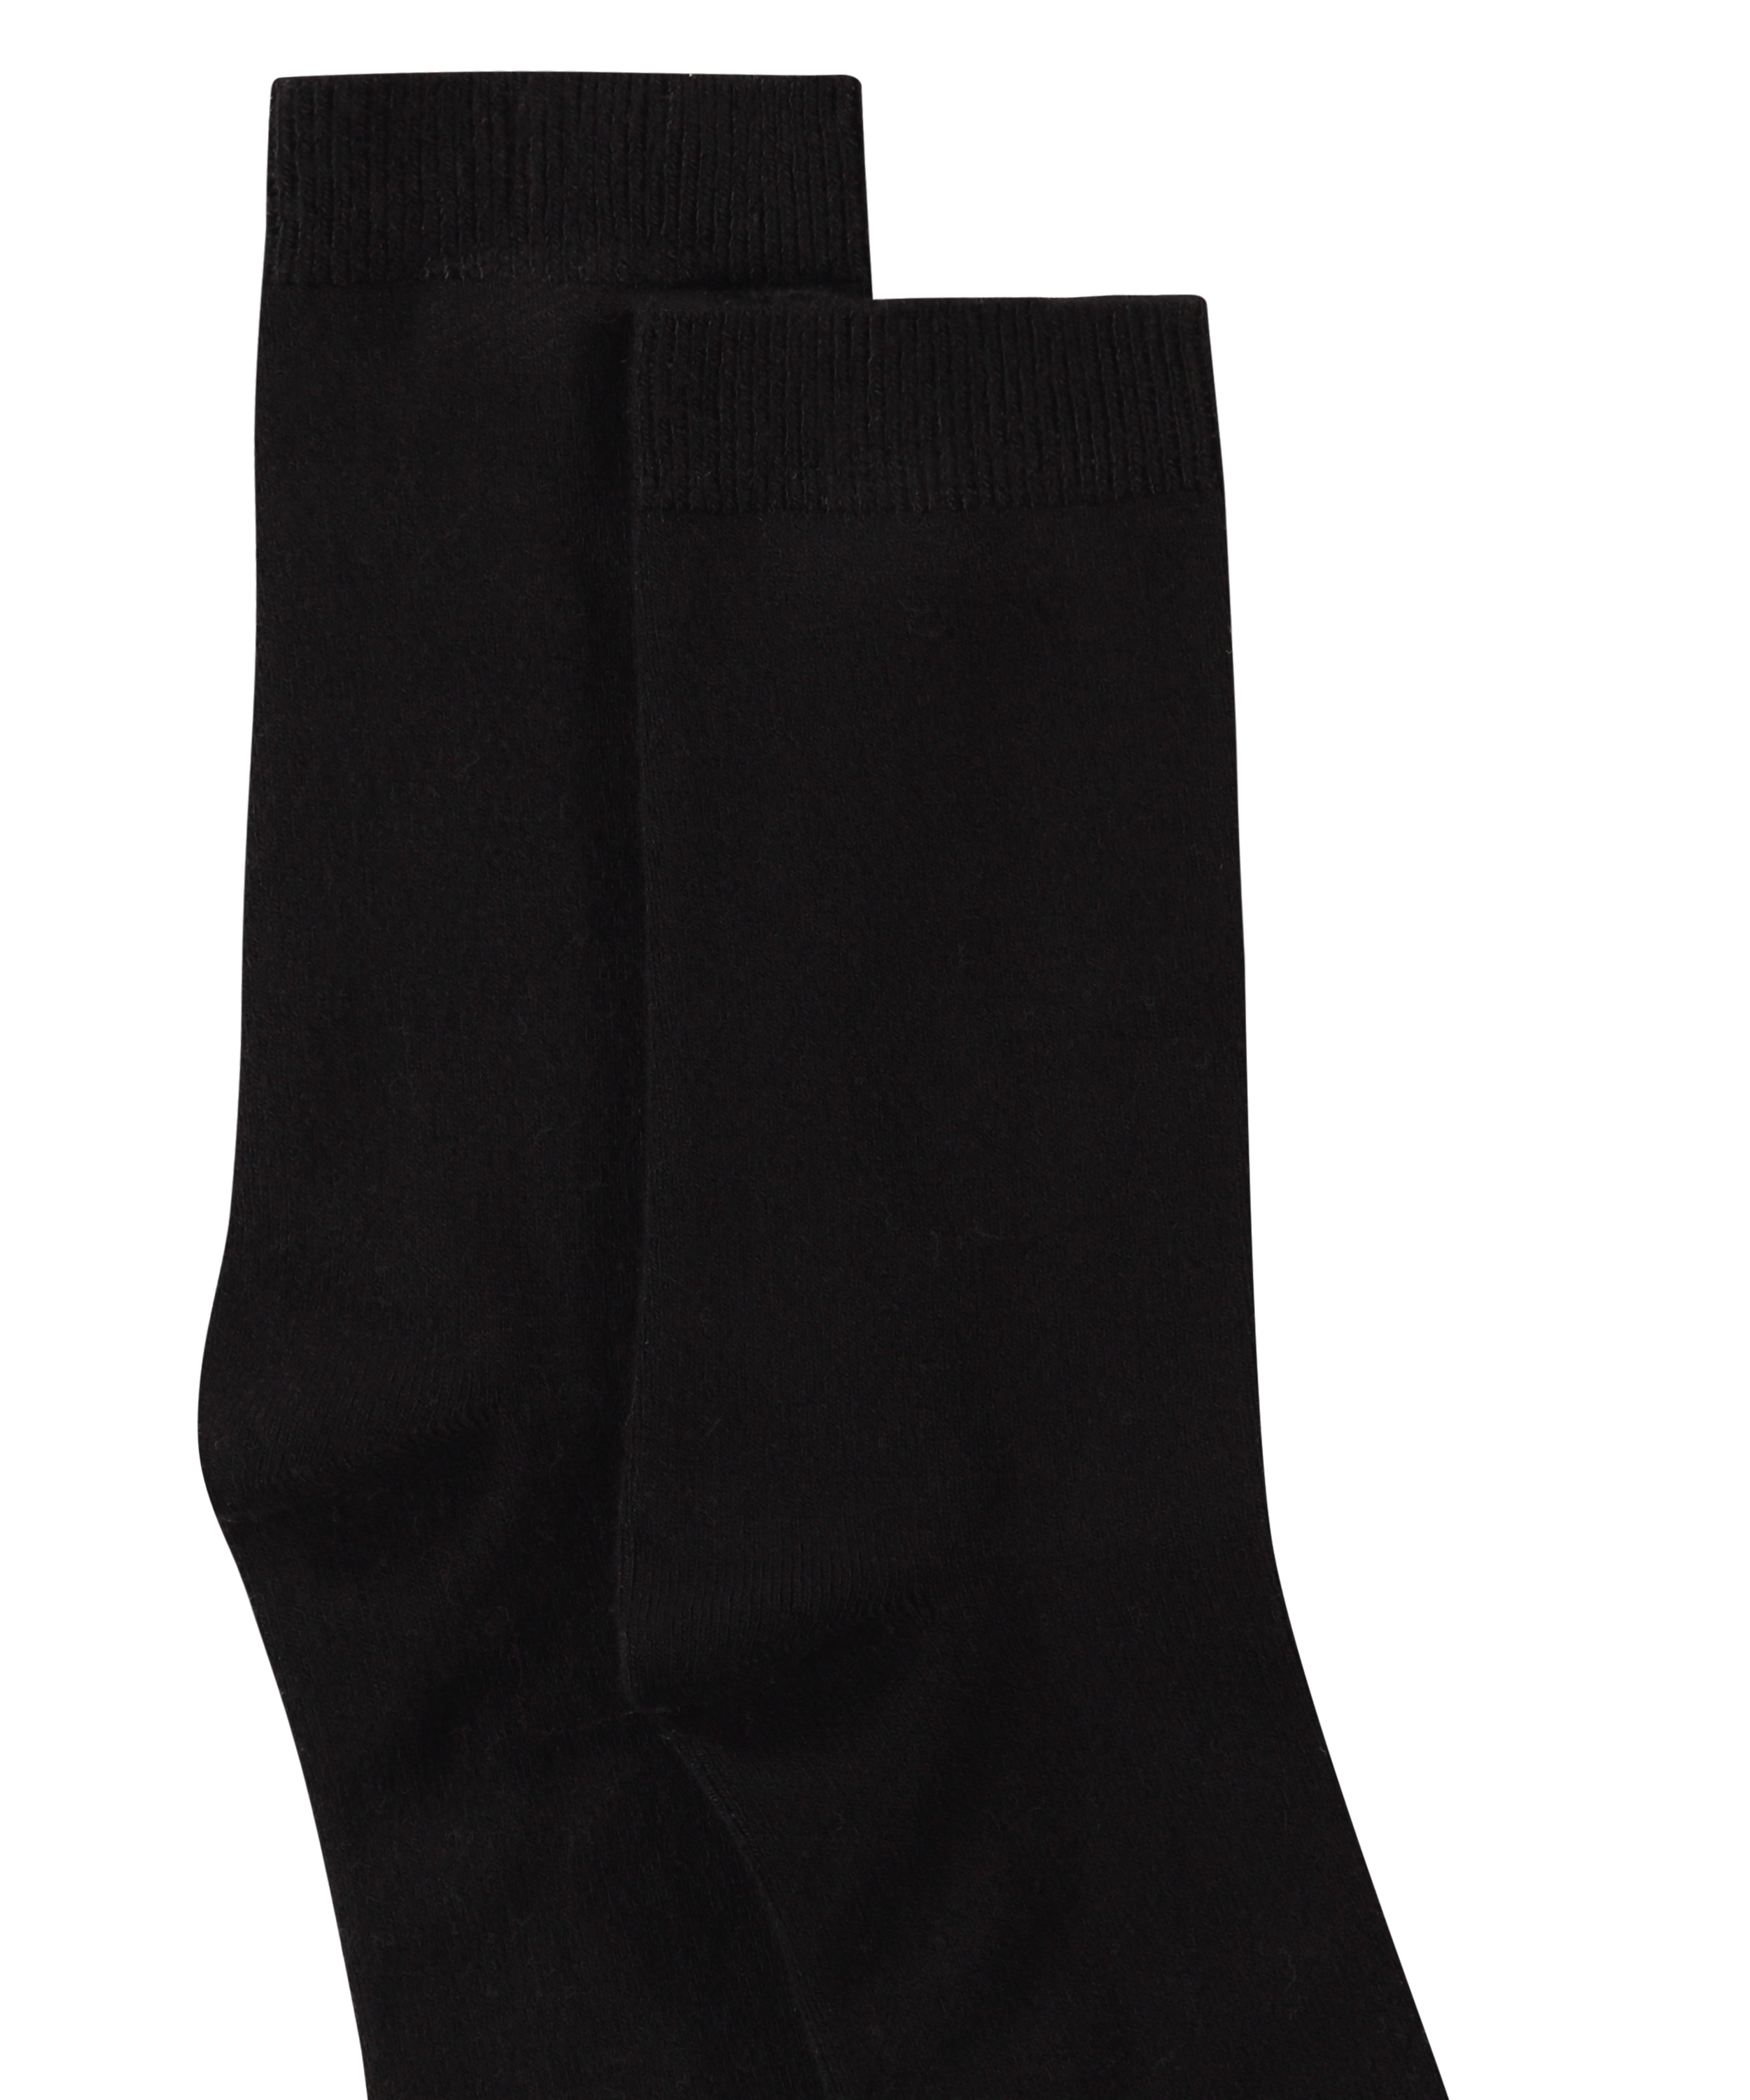 2-Pack Socks, Black, main